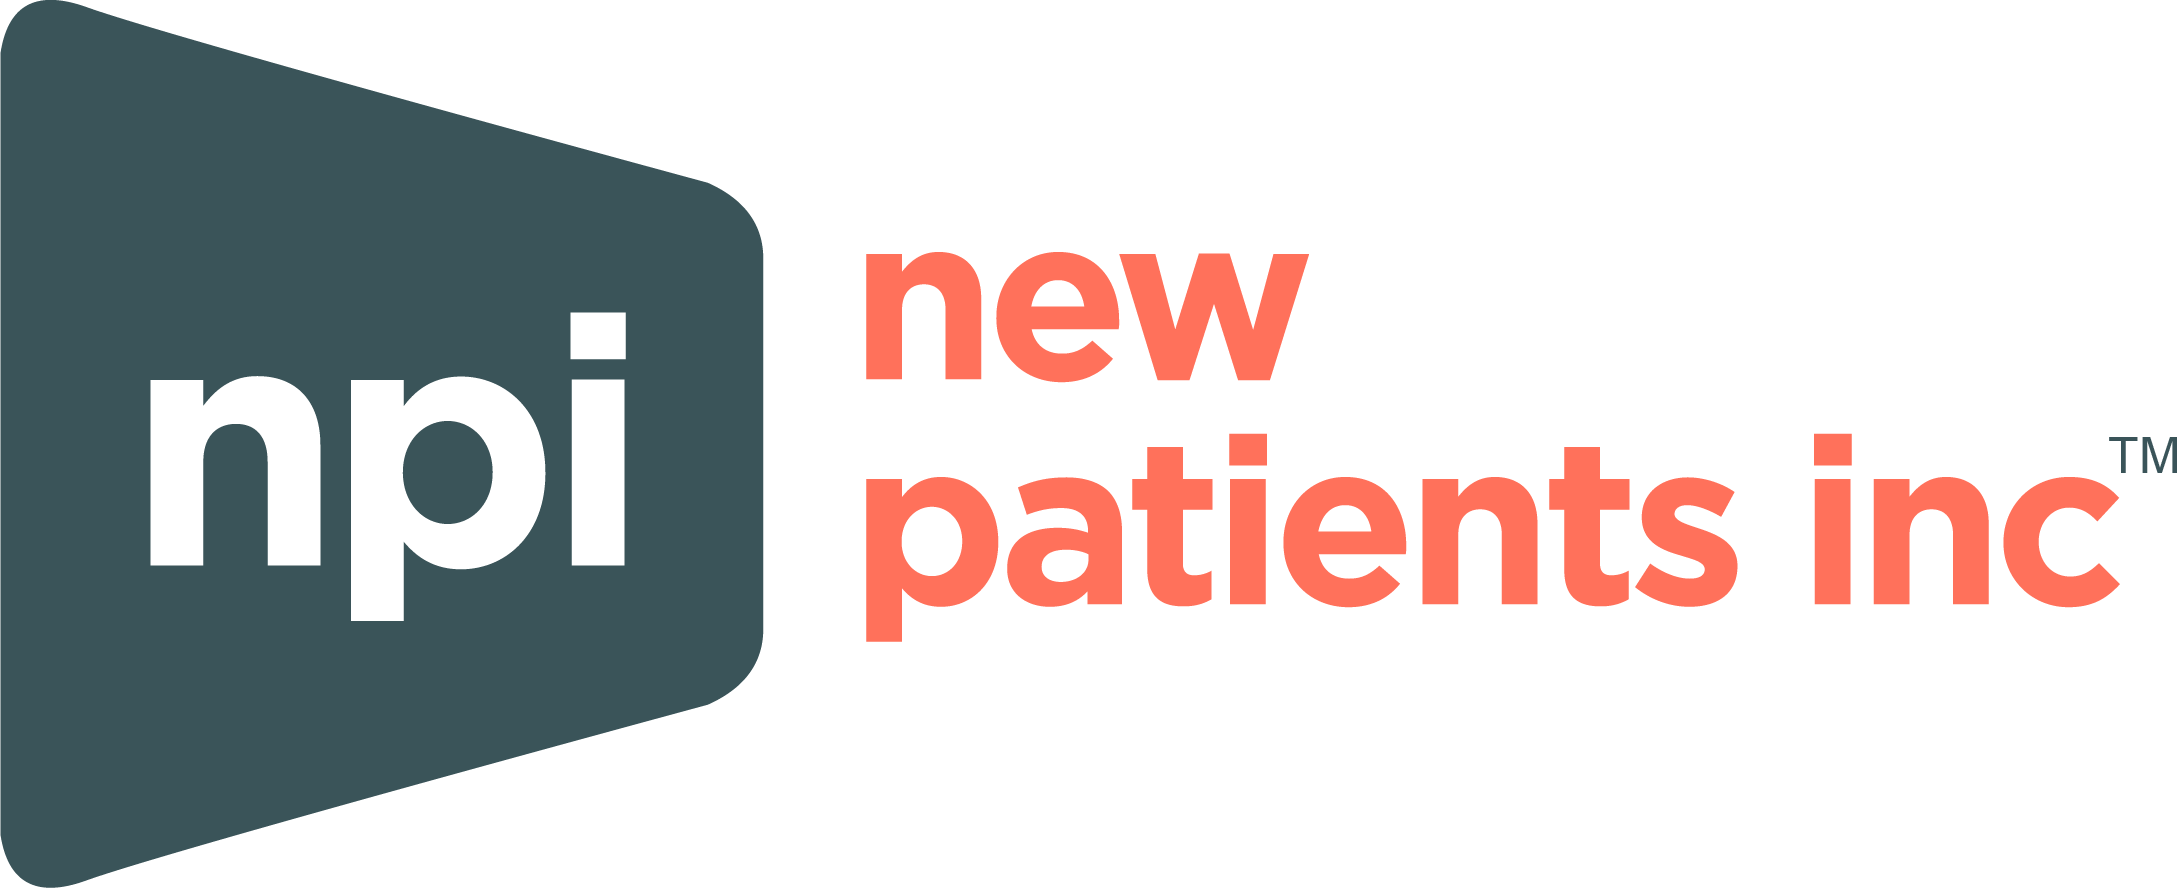 New Patients Inc Logo PNG